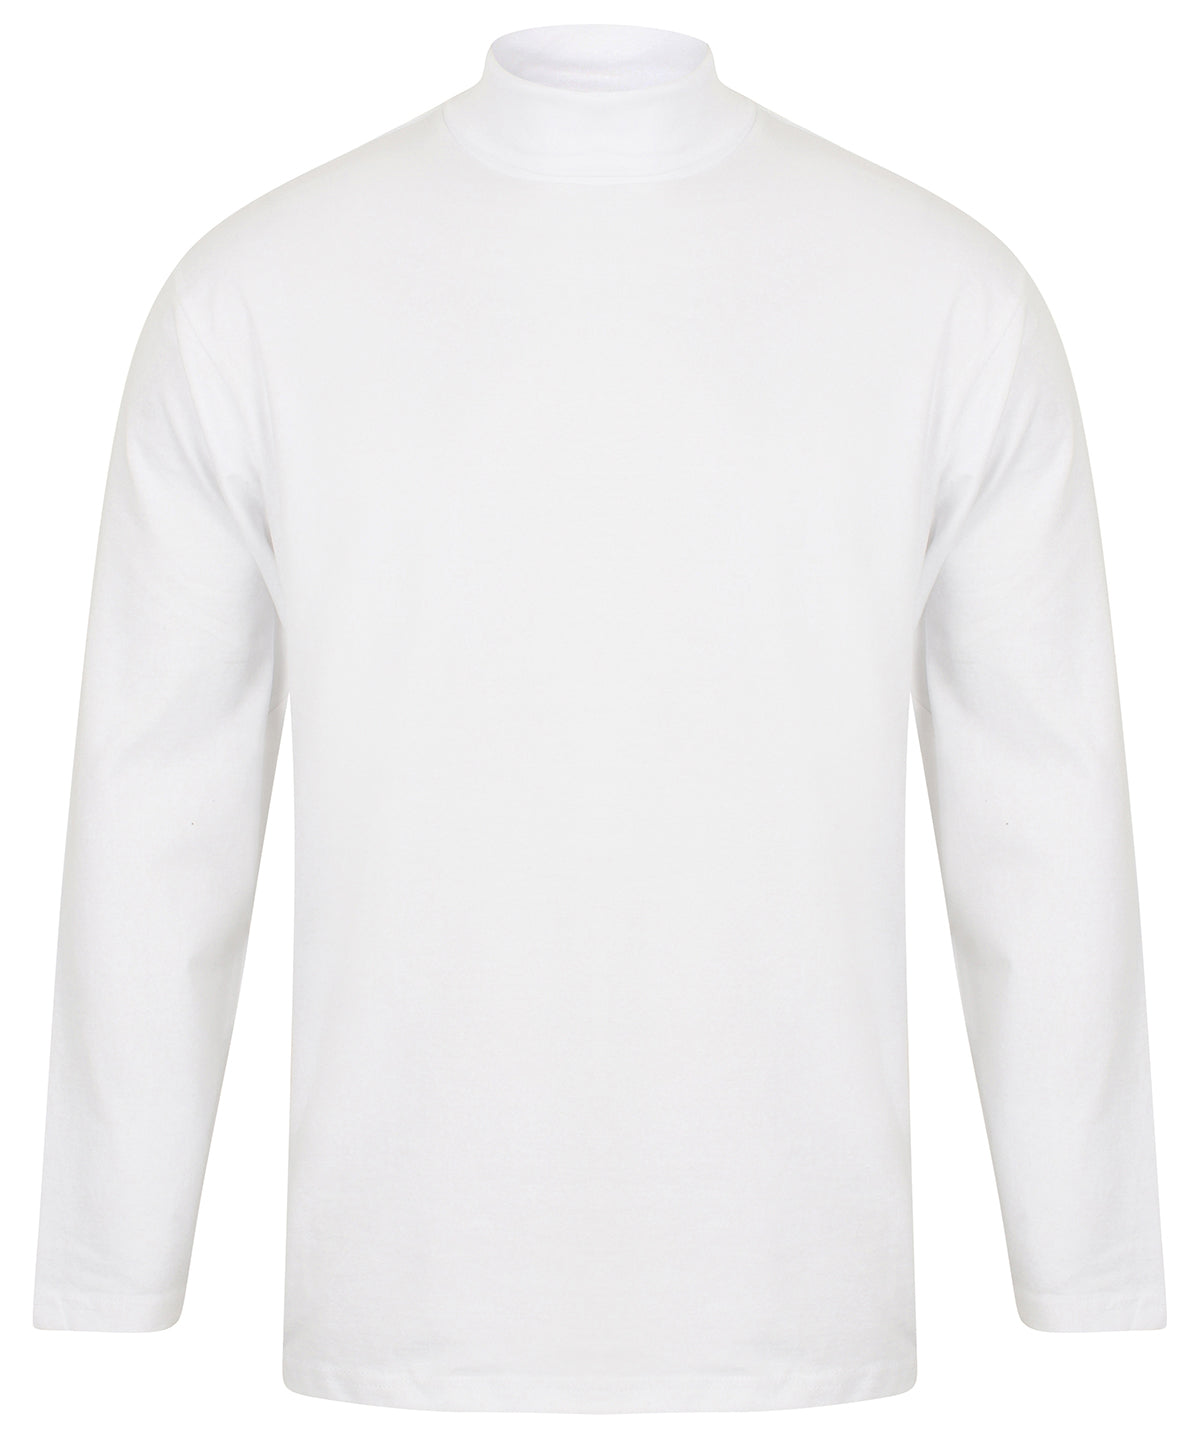 Personalised Sweatshirts - Black Henbury Long sleeve roll neck top